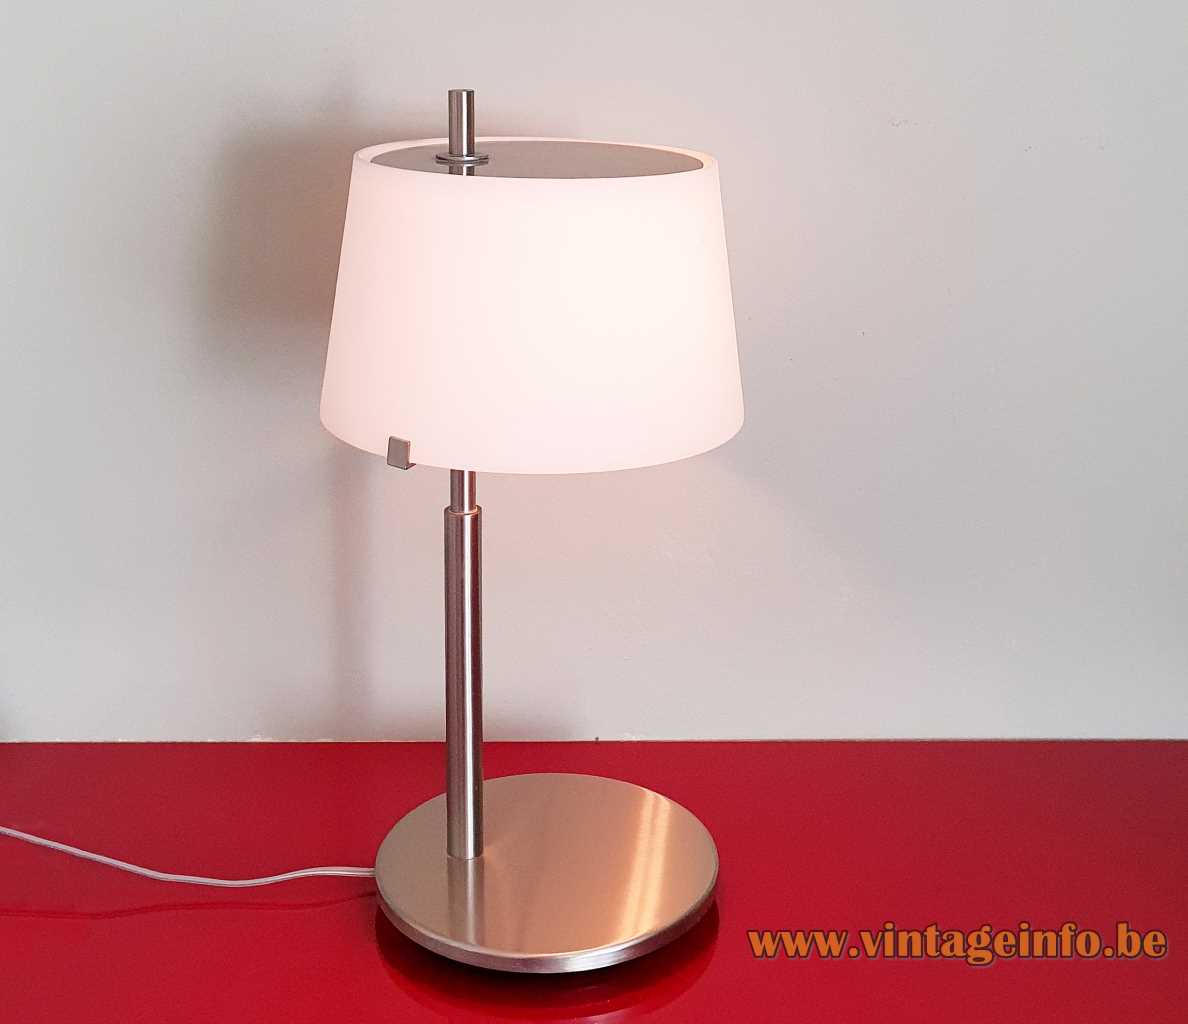 FontanaArte Passion table lamp 2004 design: Studio Beretta Associati nickel-plated metal conical opal glass lampshade 